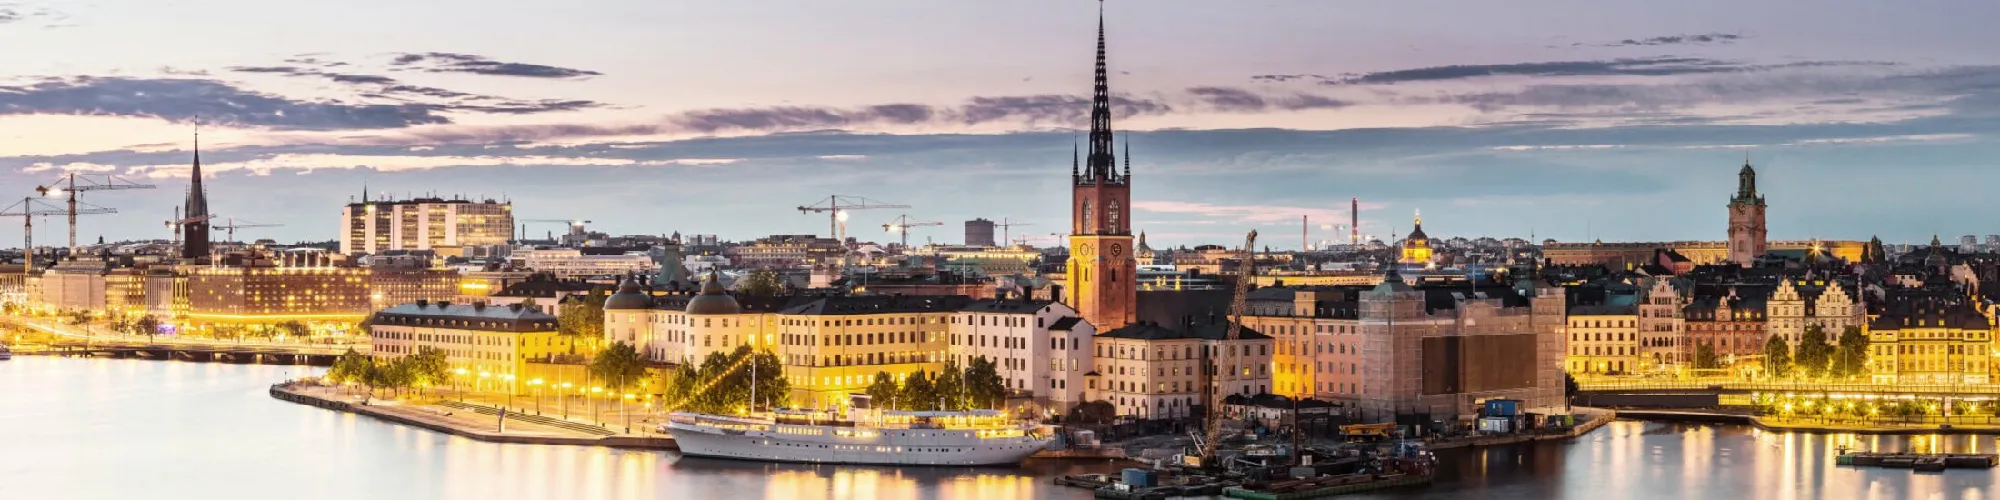 Städtereise Stockholm background image